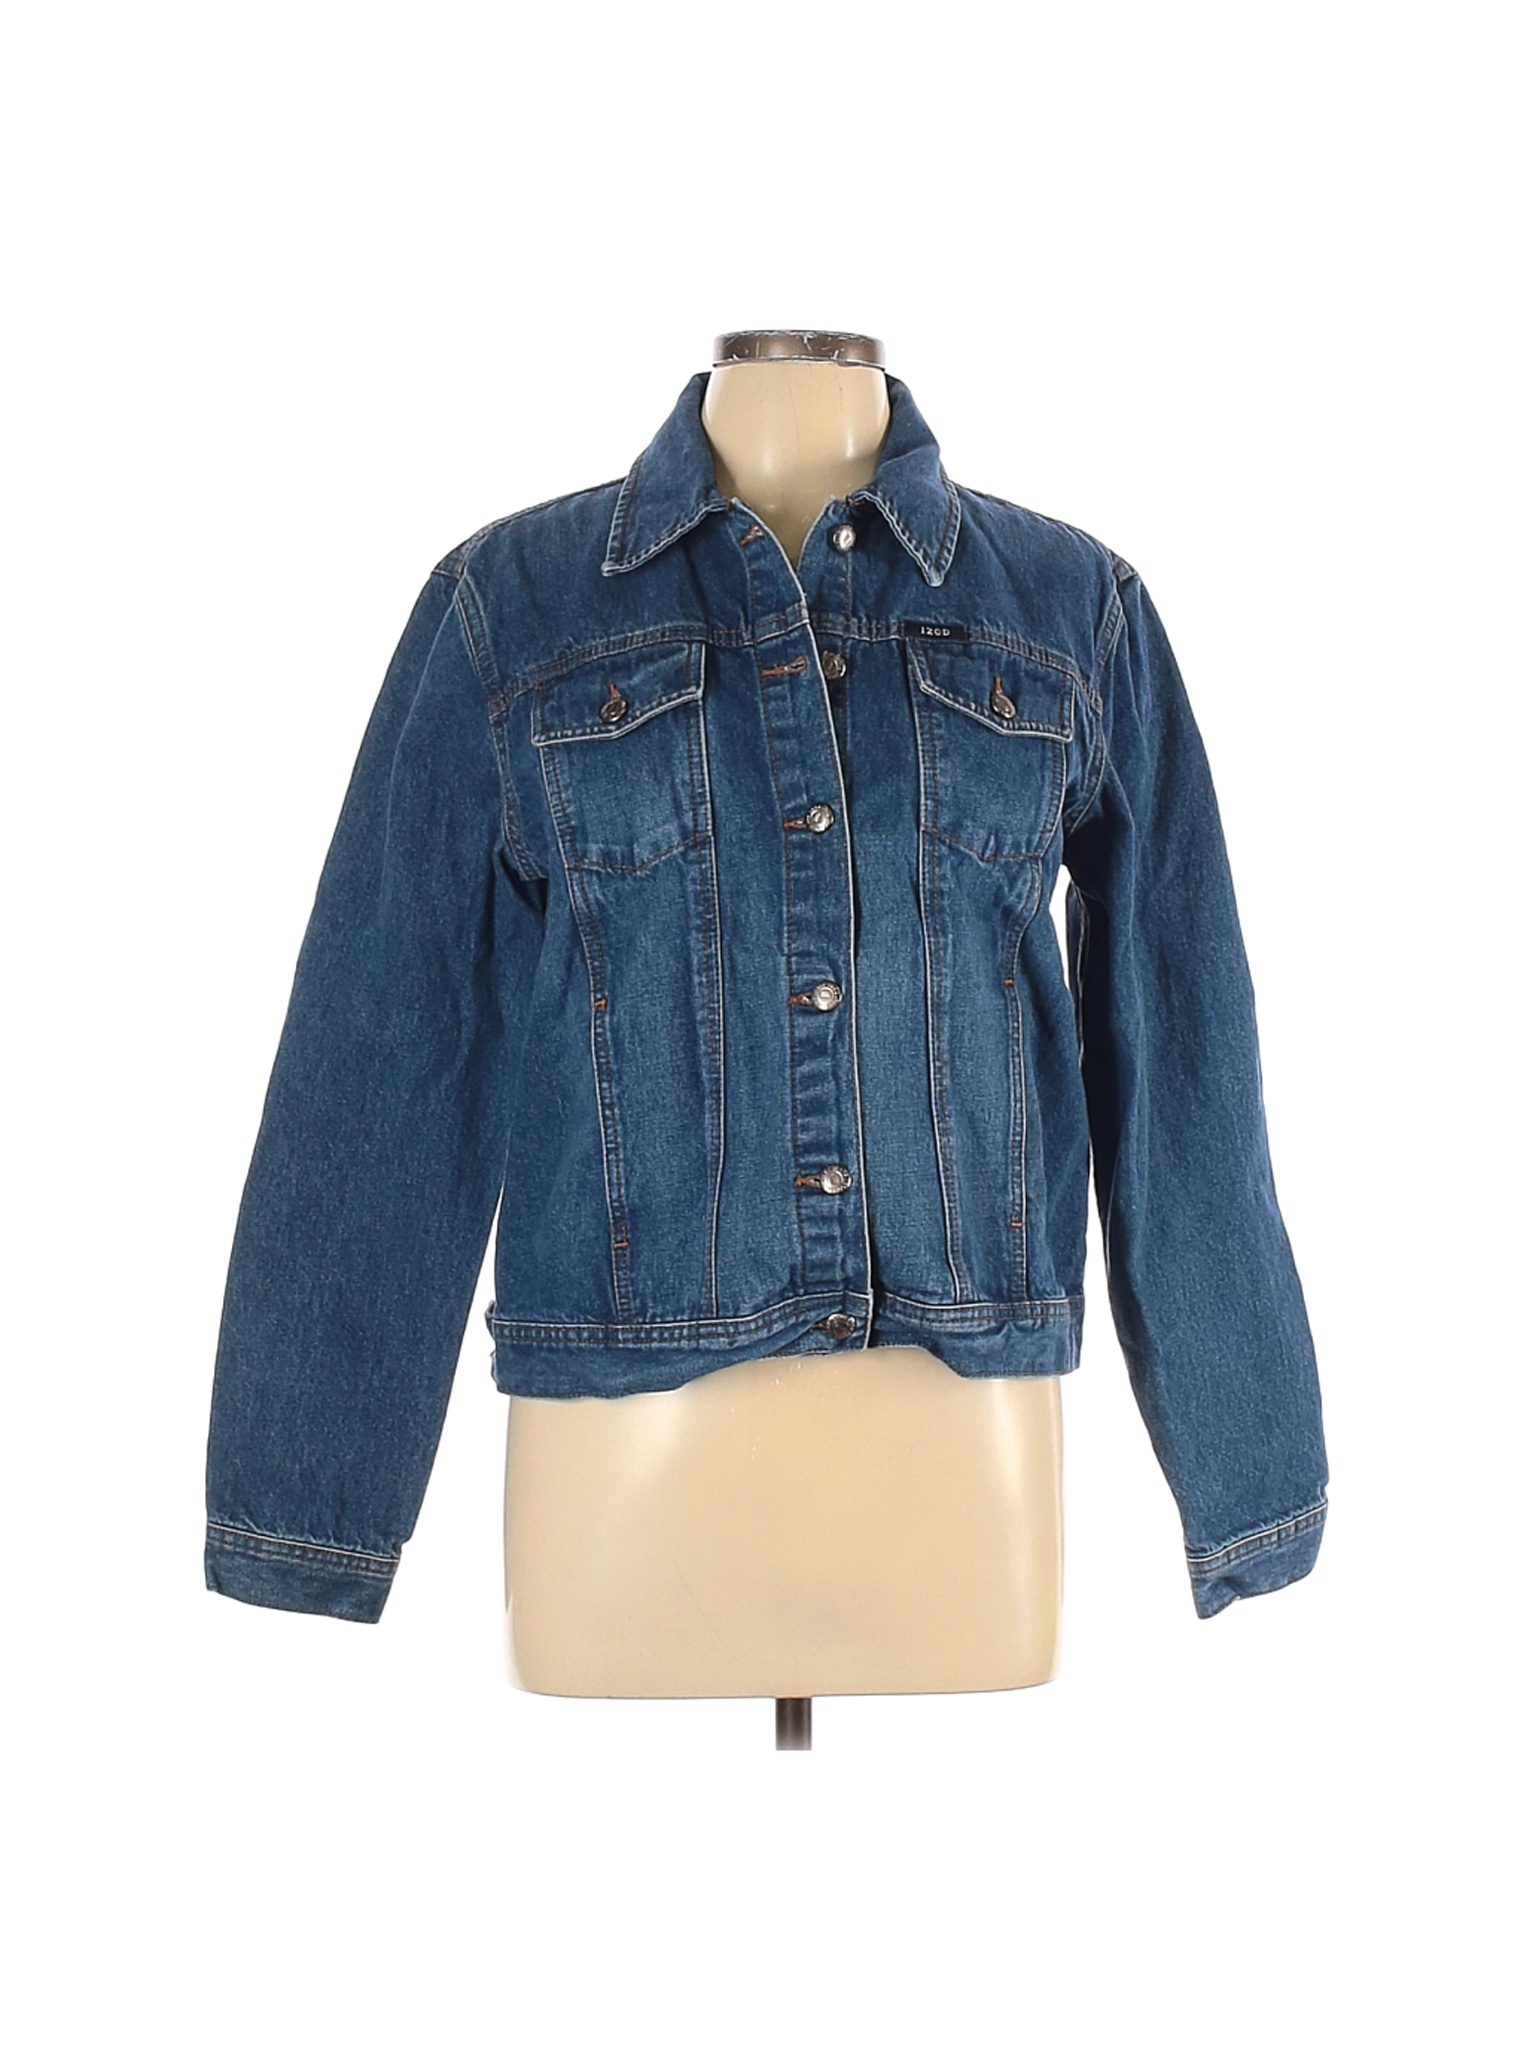 IZOD Women Blue Denim Jacket L | eBay